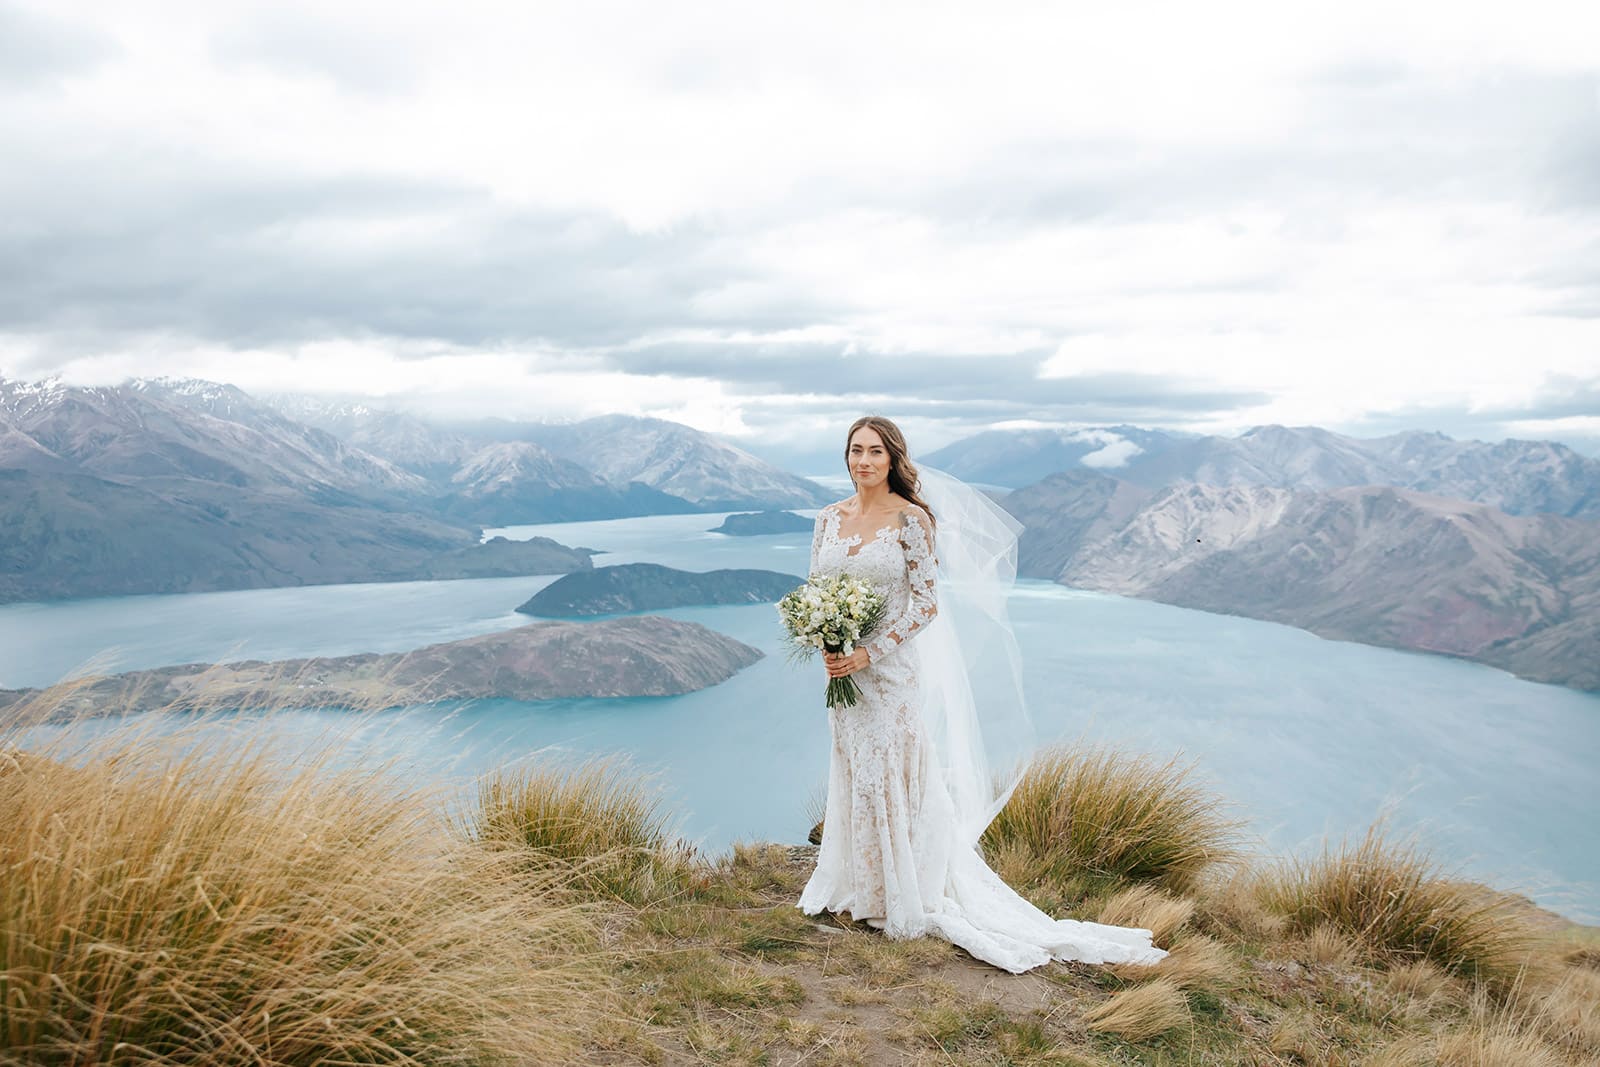 Adventure Wedding in Queenstown New Zealand with helicopter